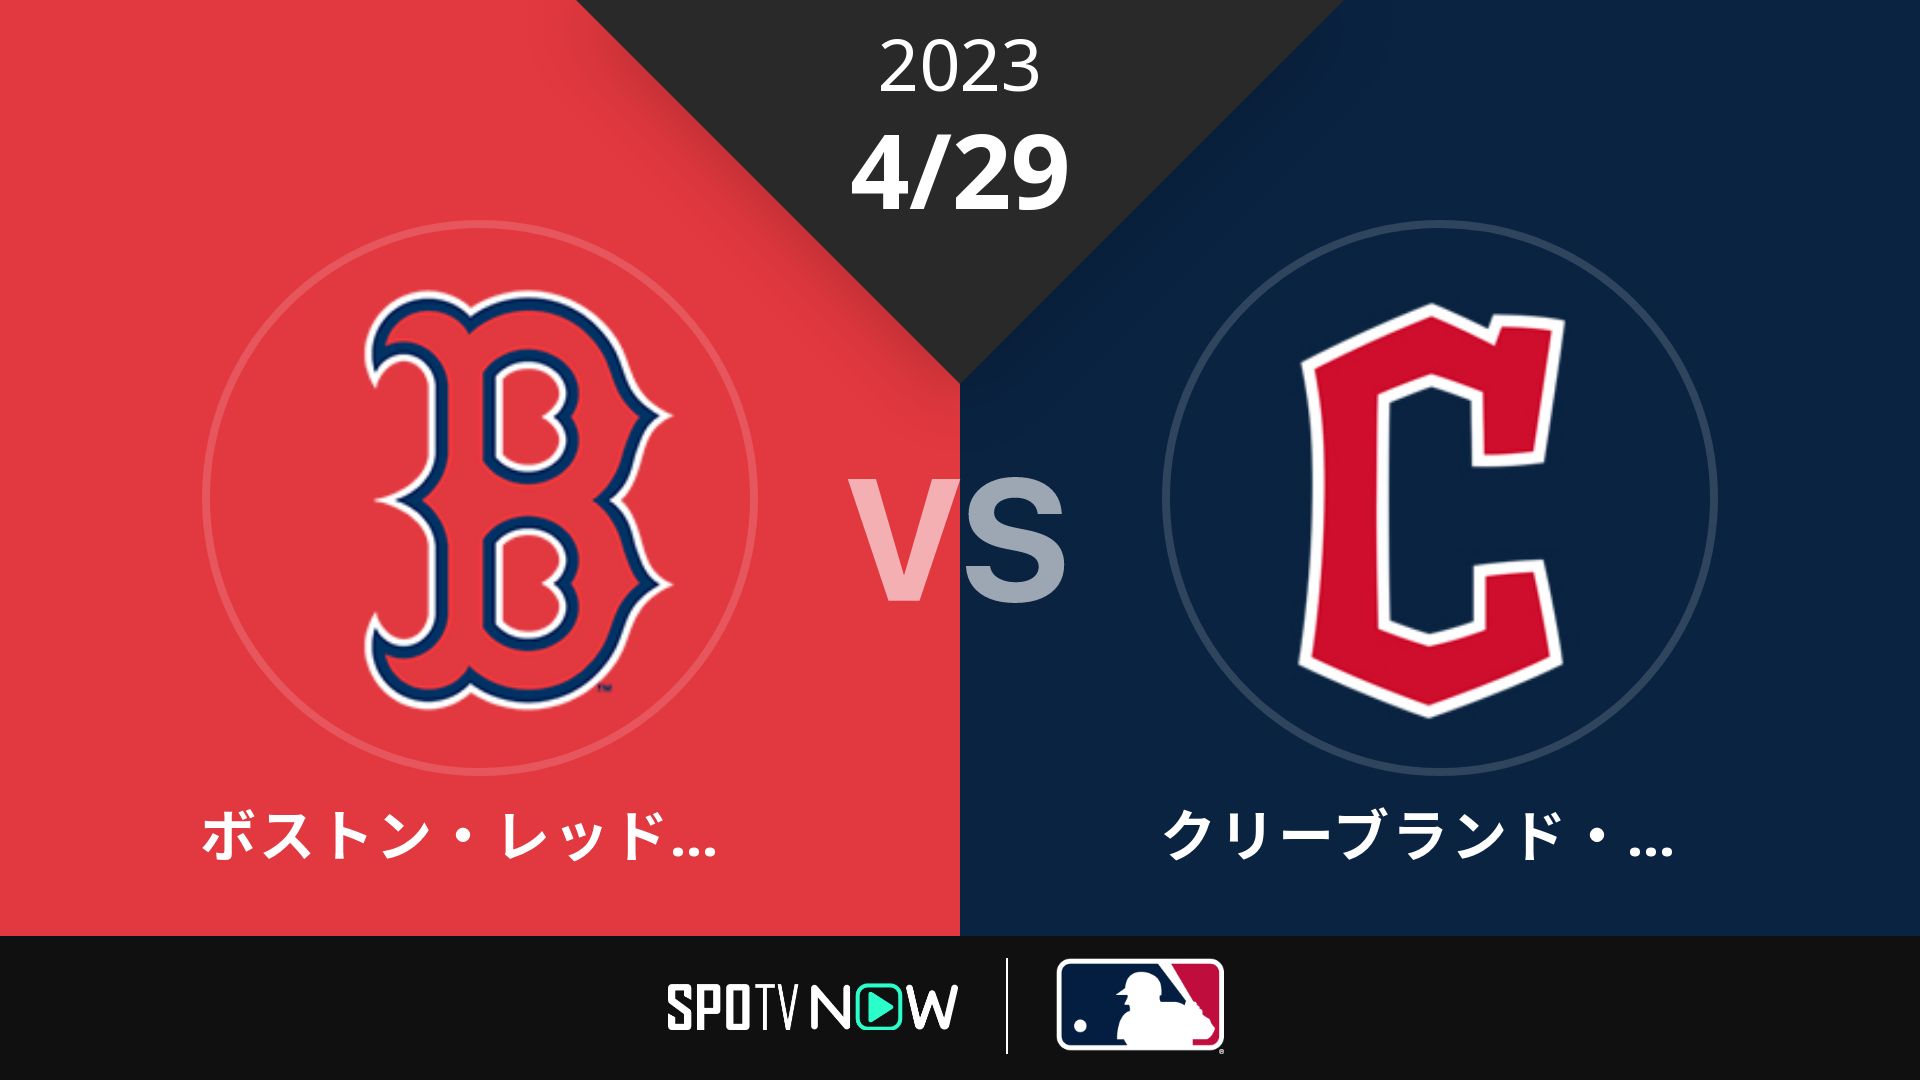 2023/4/29 Rソックス vs ガーディアンズ [MLB]